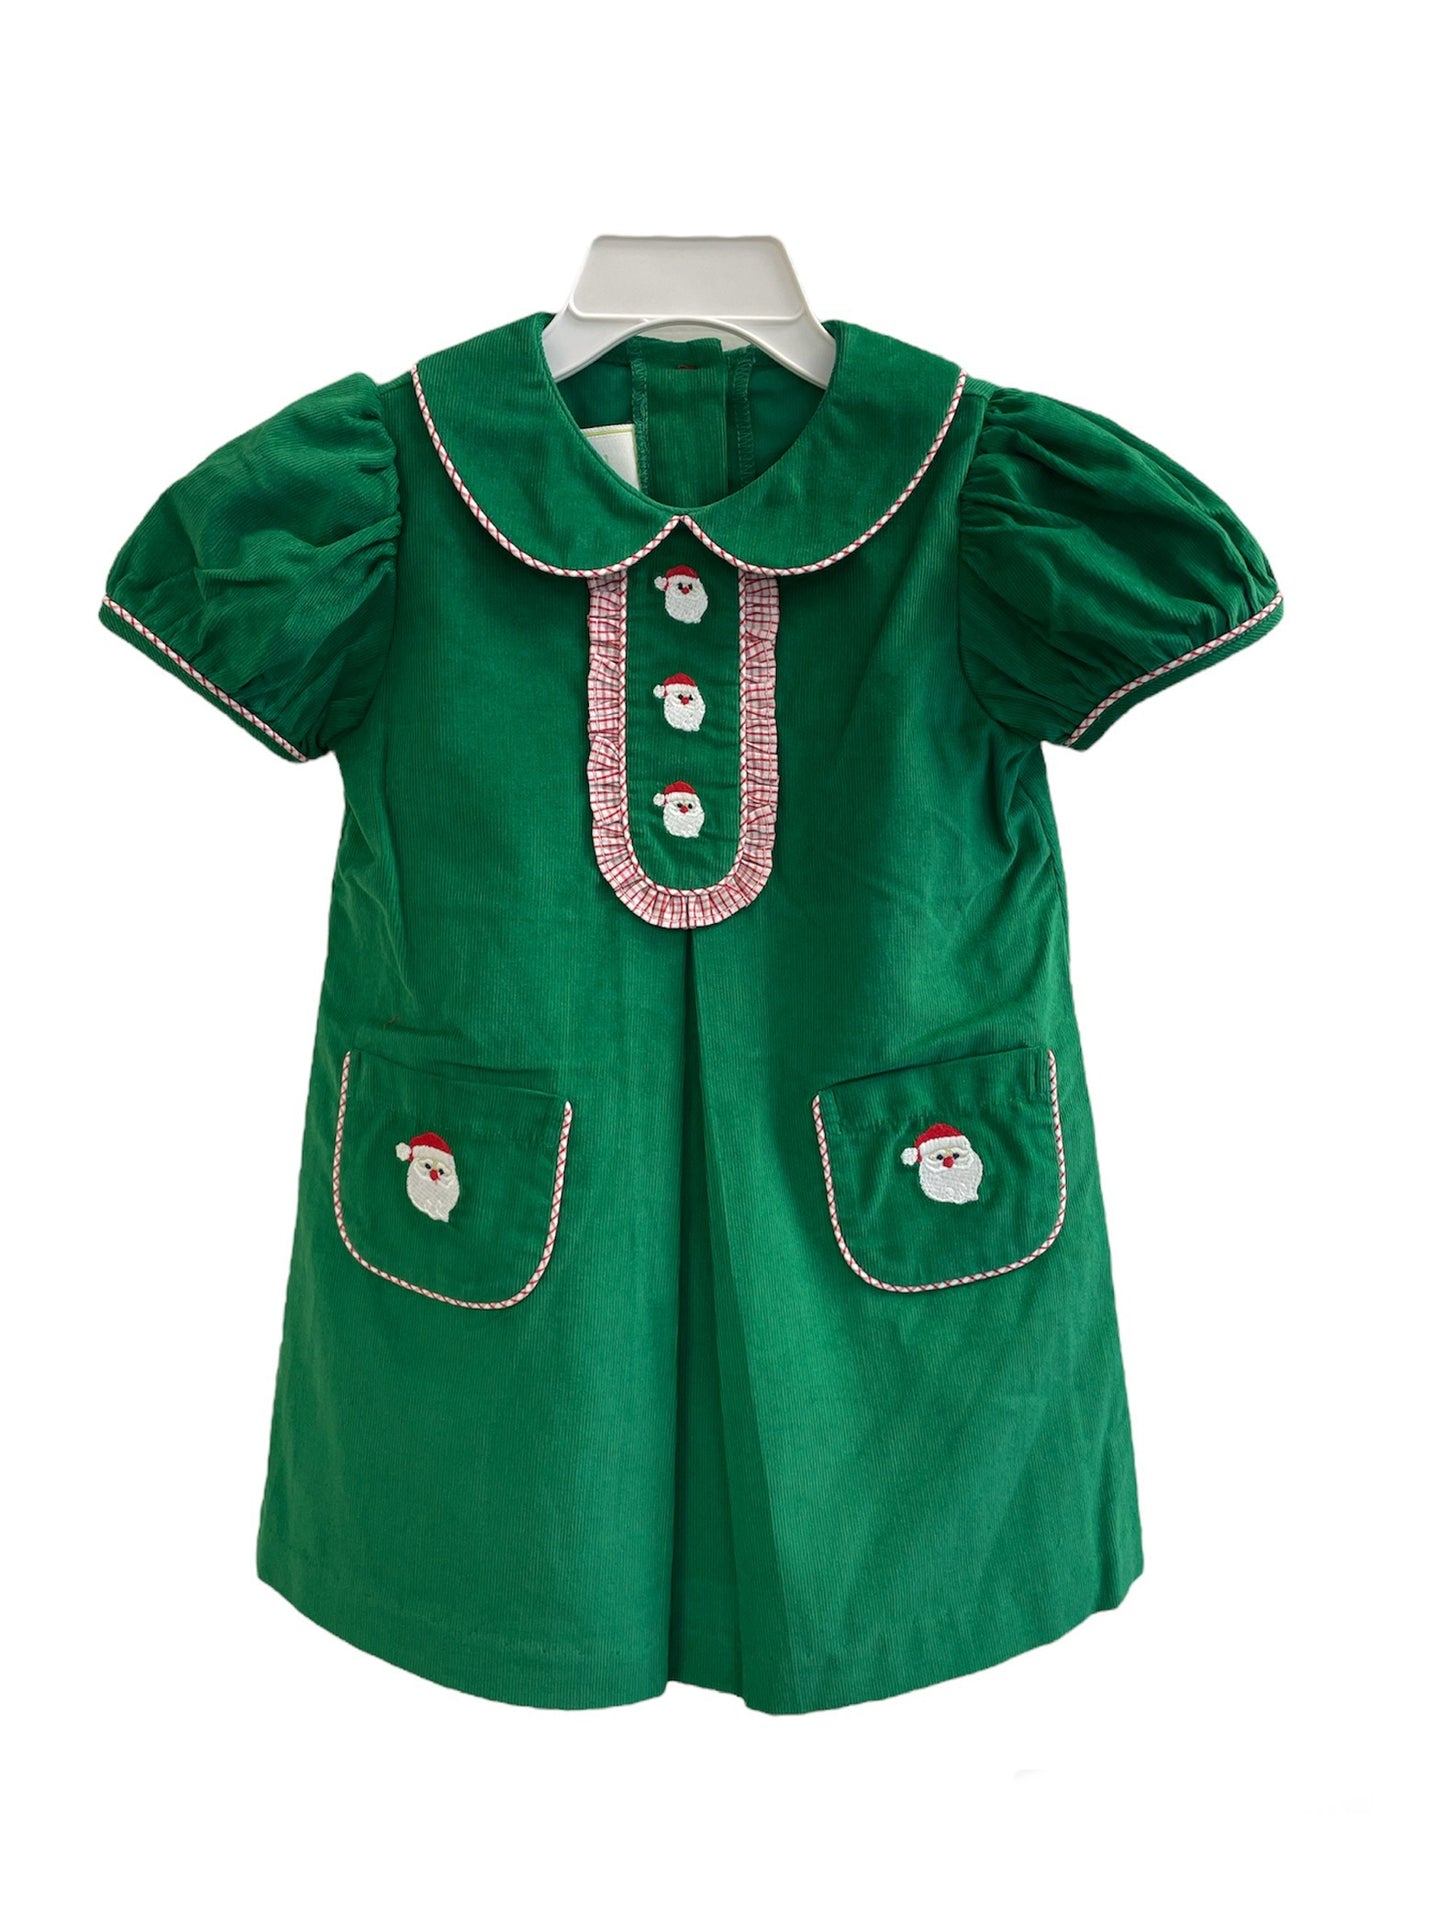 Green Corduroy Dress with Santa's